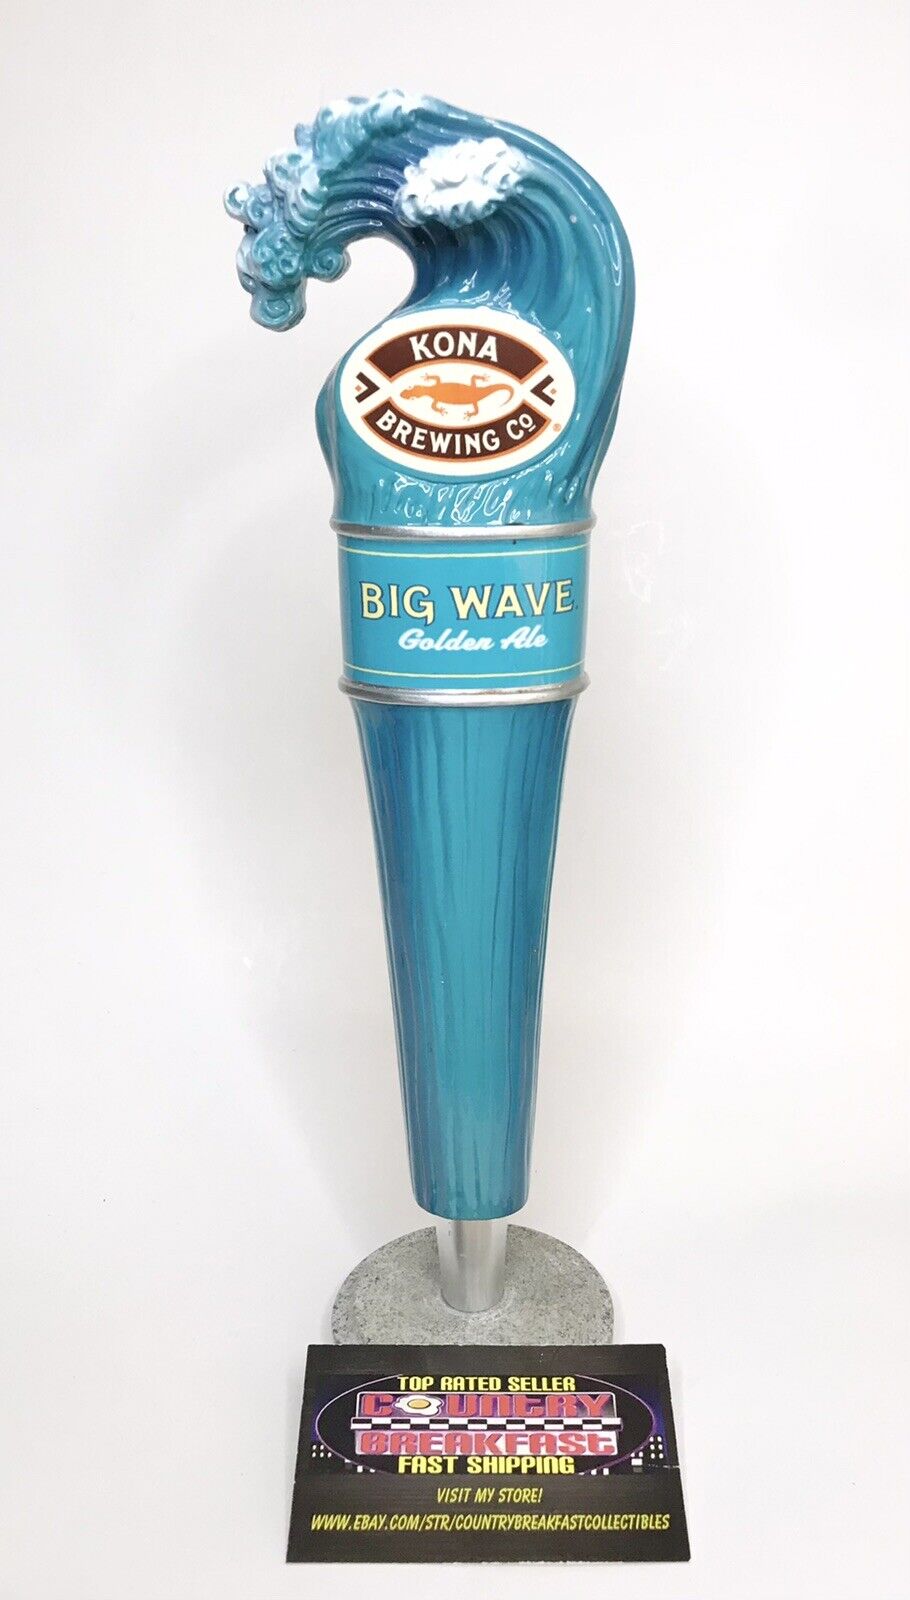 Kona Brewing Big Wave Golden Ale Logo Beer Tap Handle 11.5” Tall - Excellent